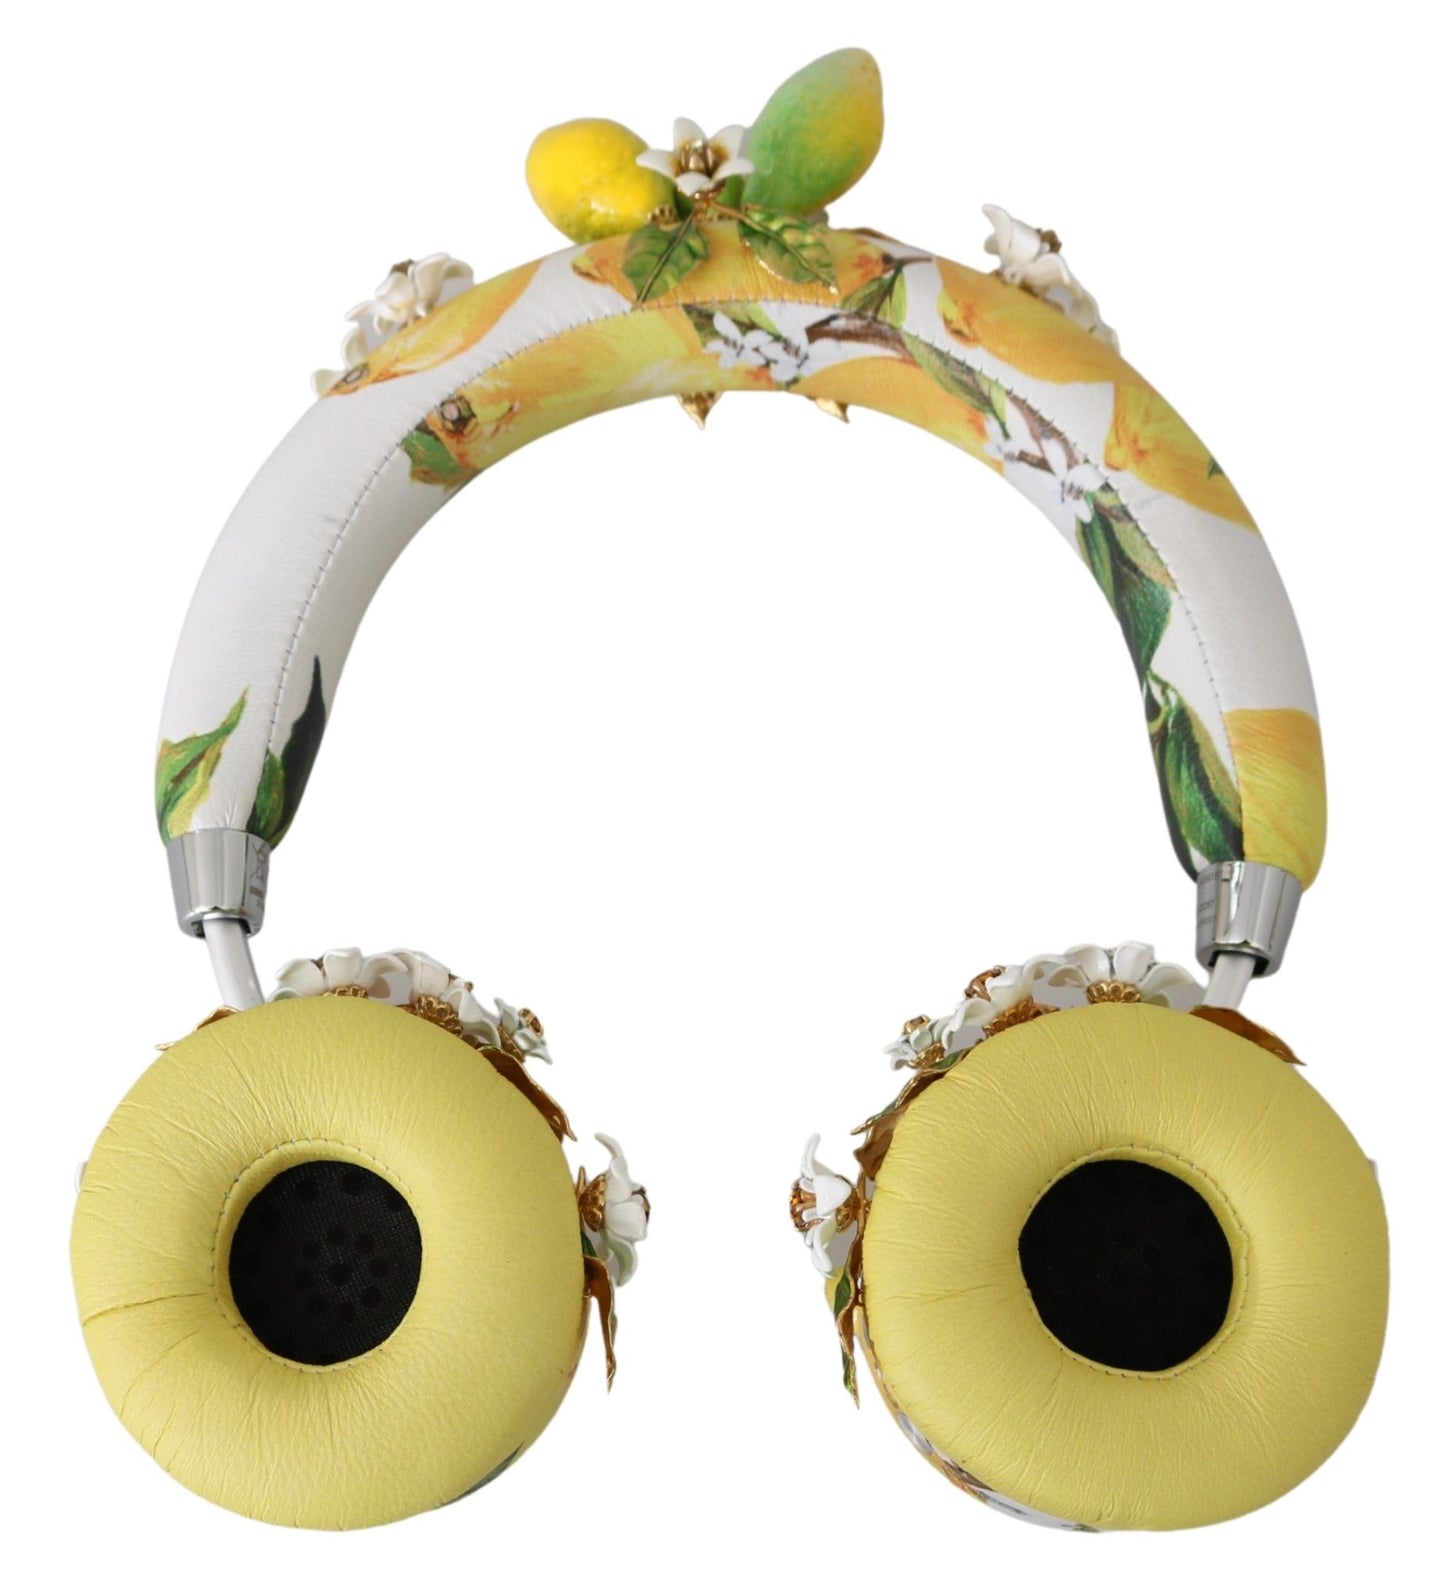 Dolce & Gabbana Yellow Lemon Crystal Floral Headset Headphones